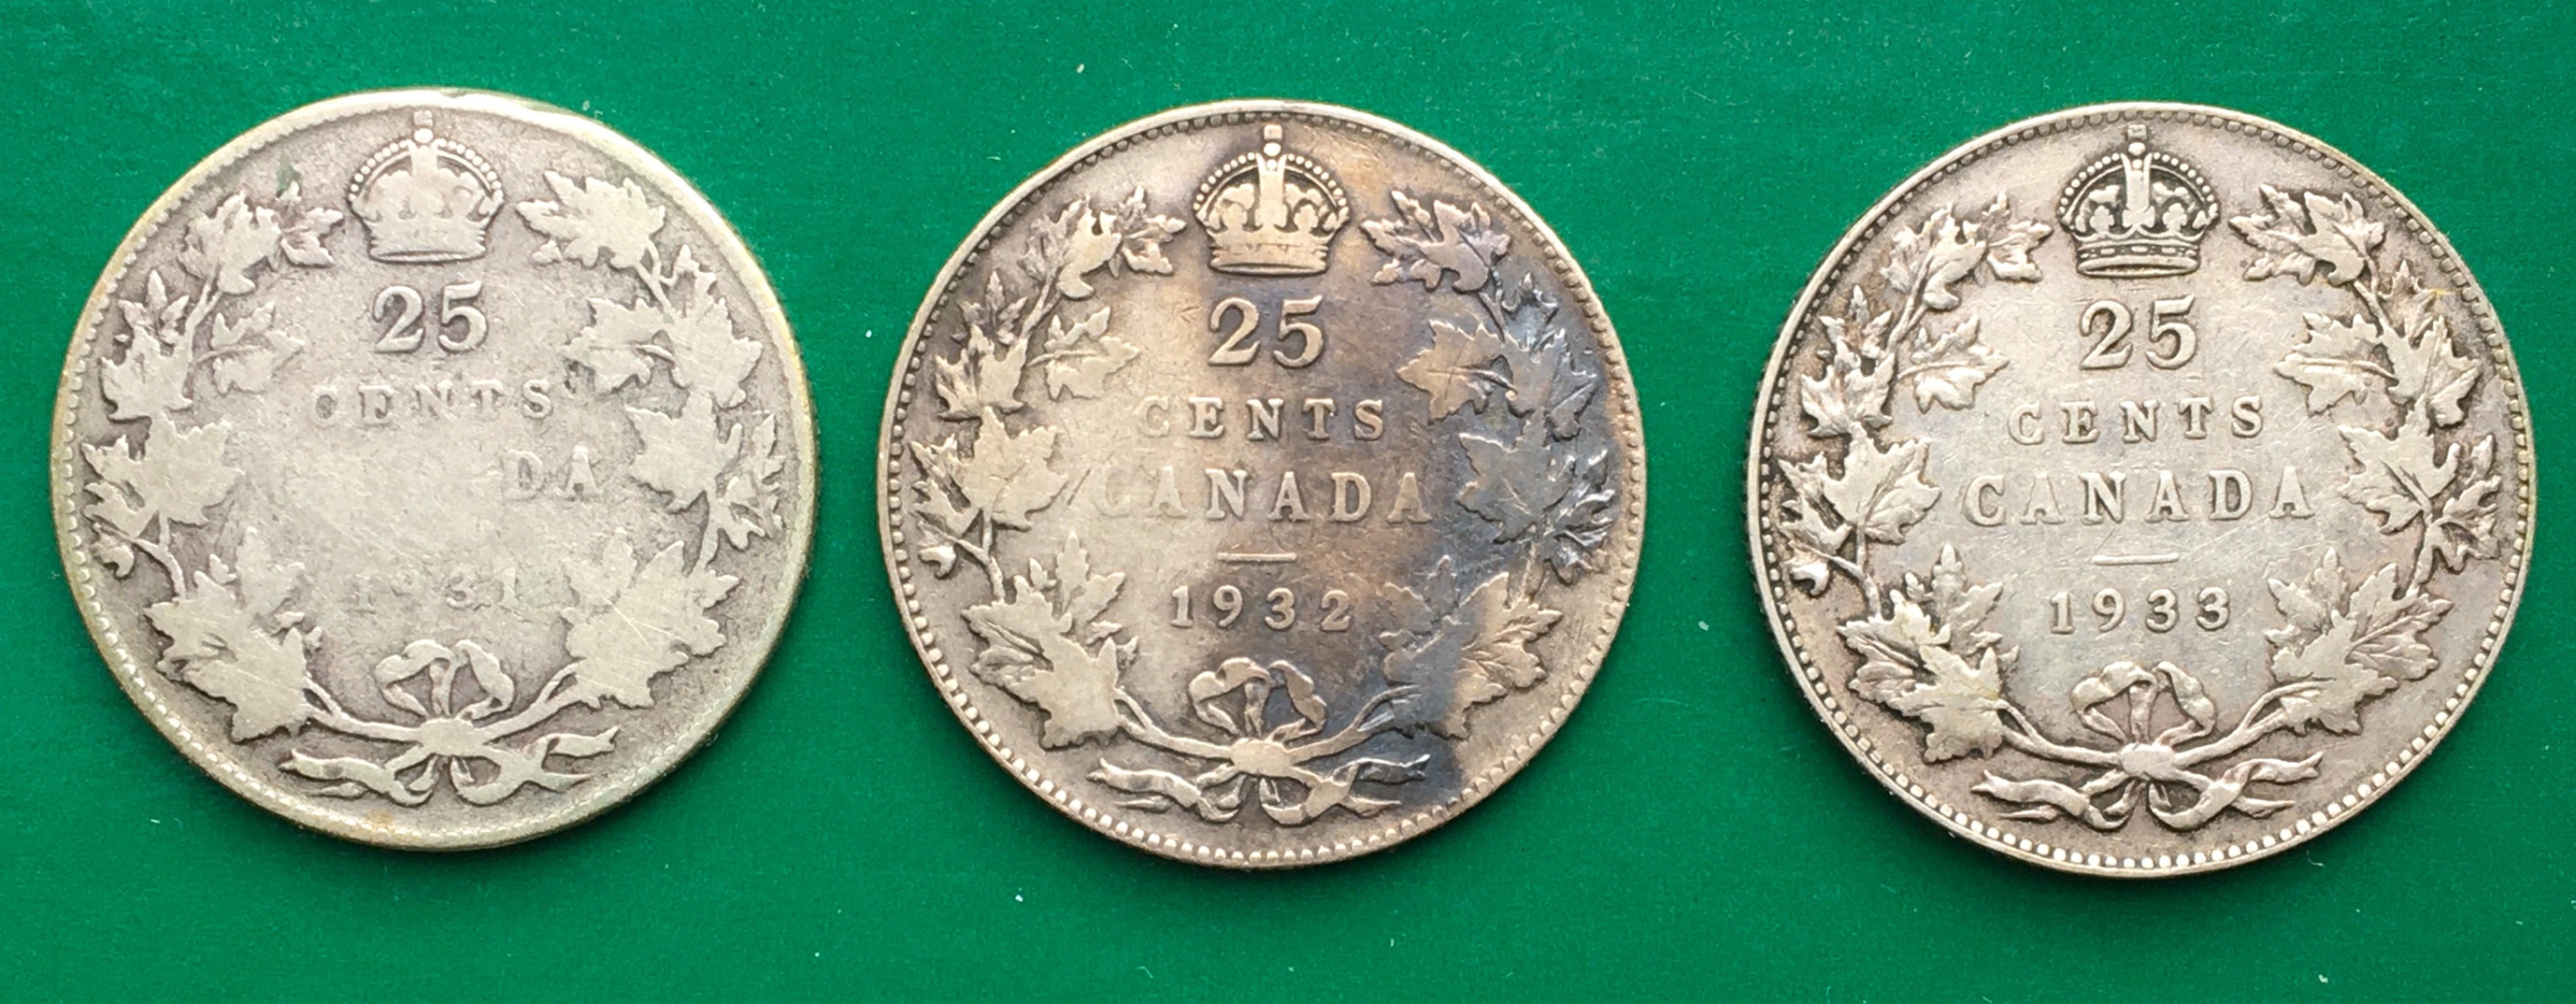 25 cents 1931.JPG